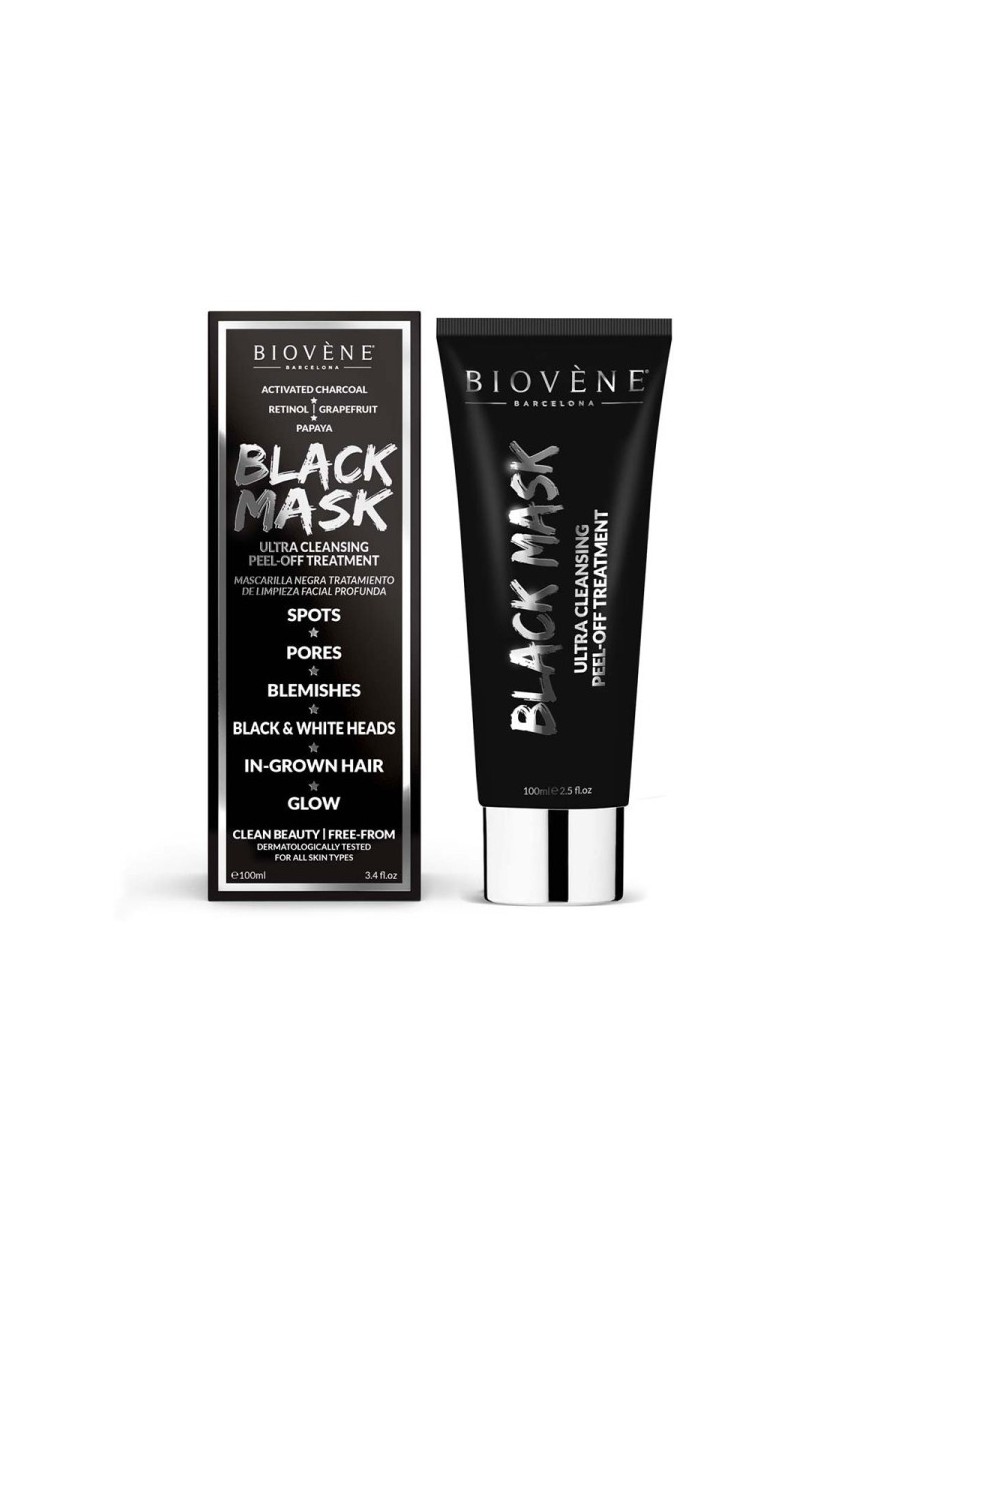 Biovene Black Mask Ultra Cleansing Peel-Off Treatment 100ml